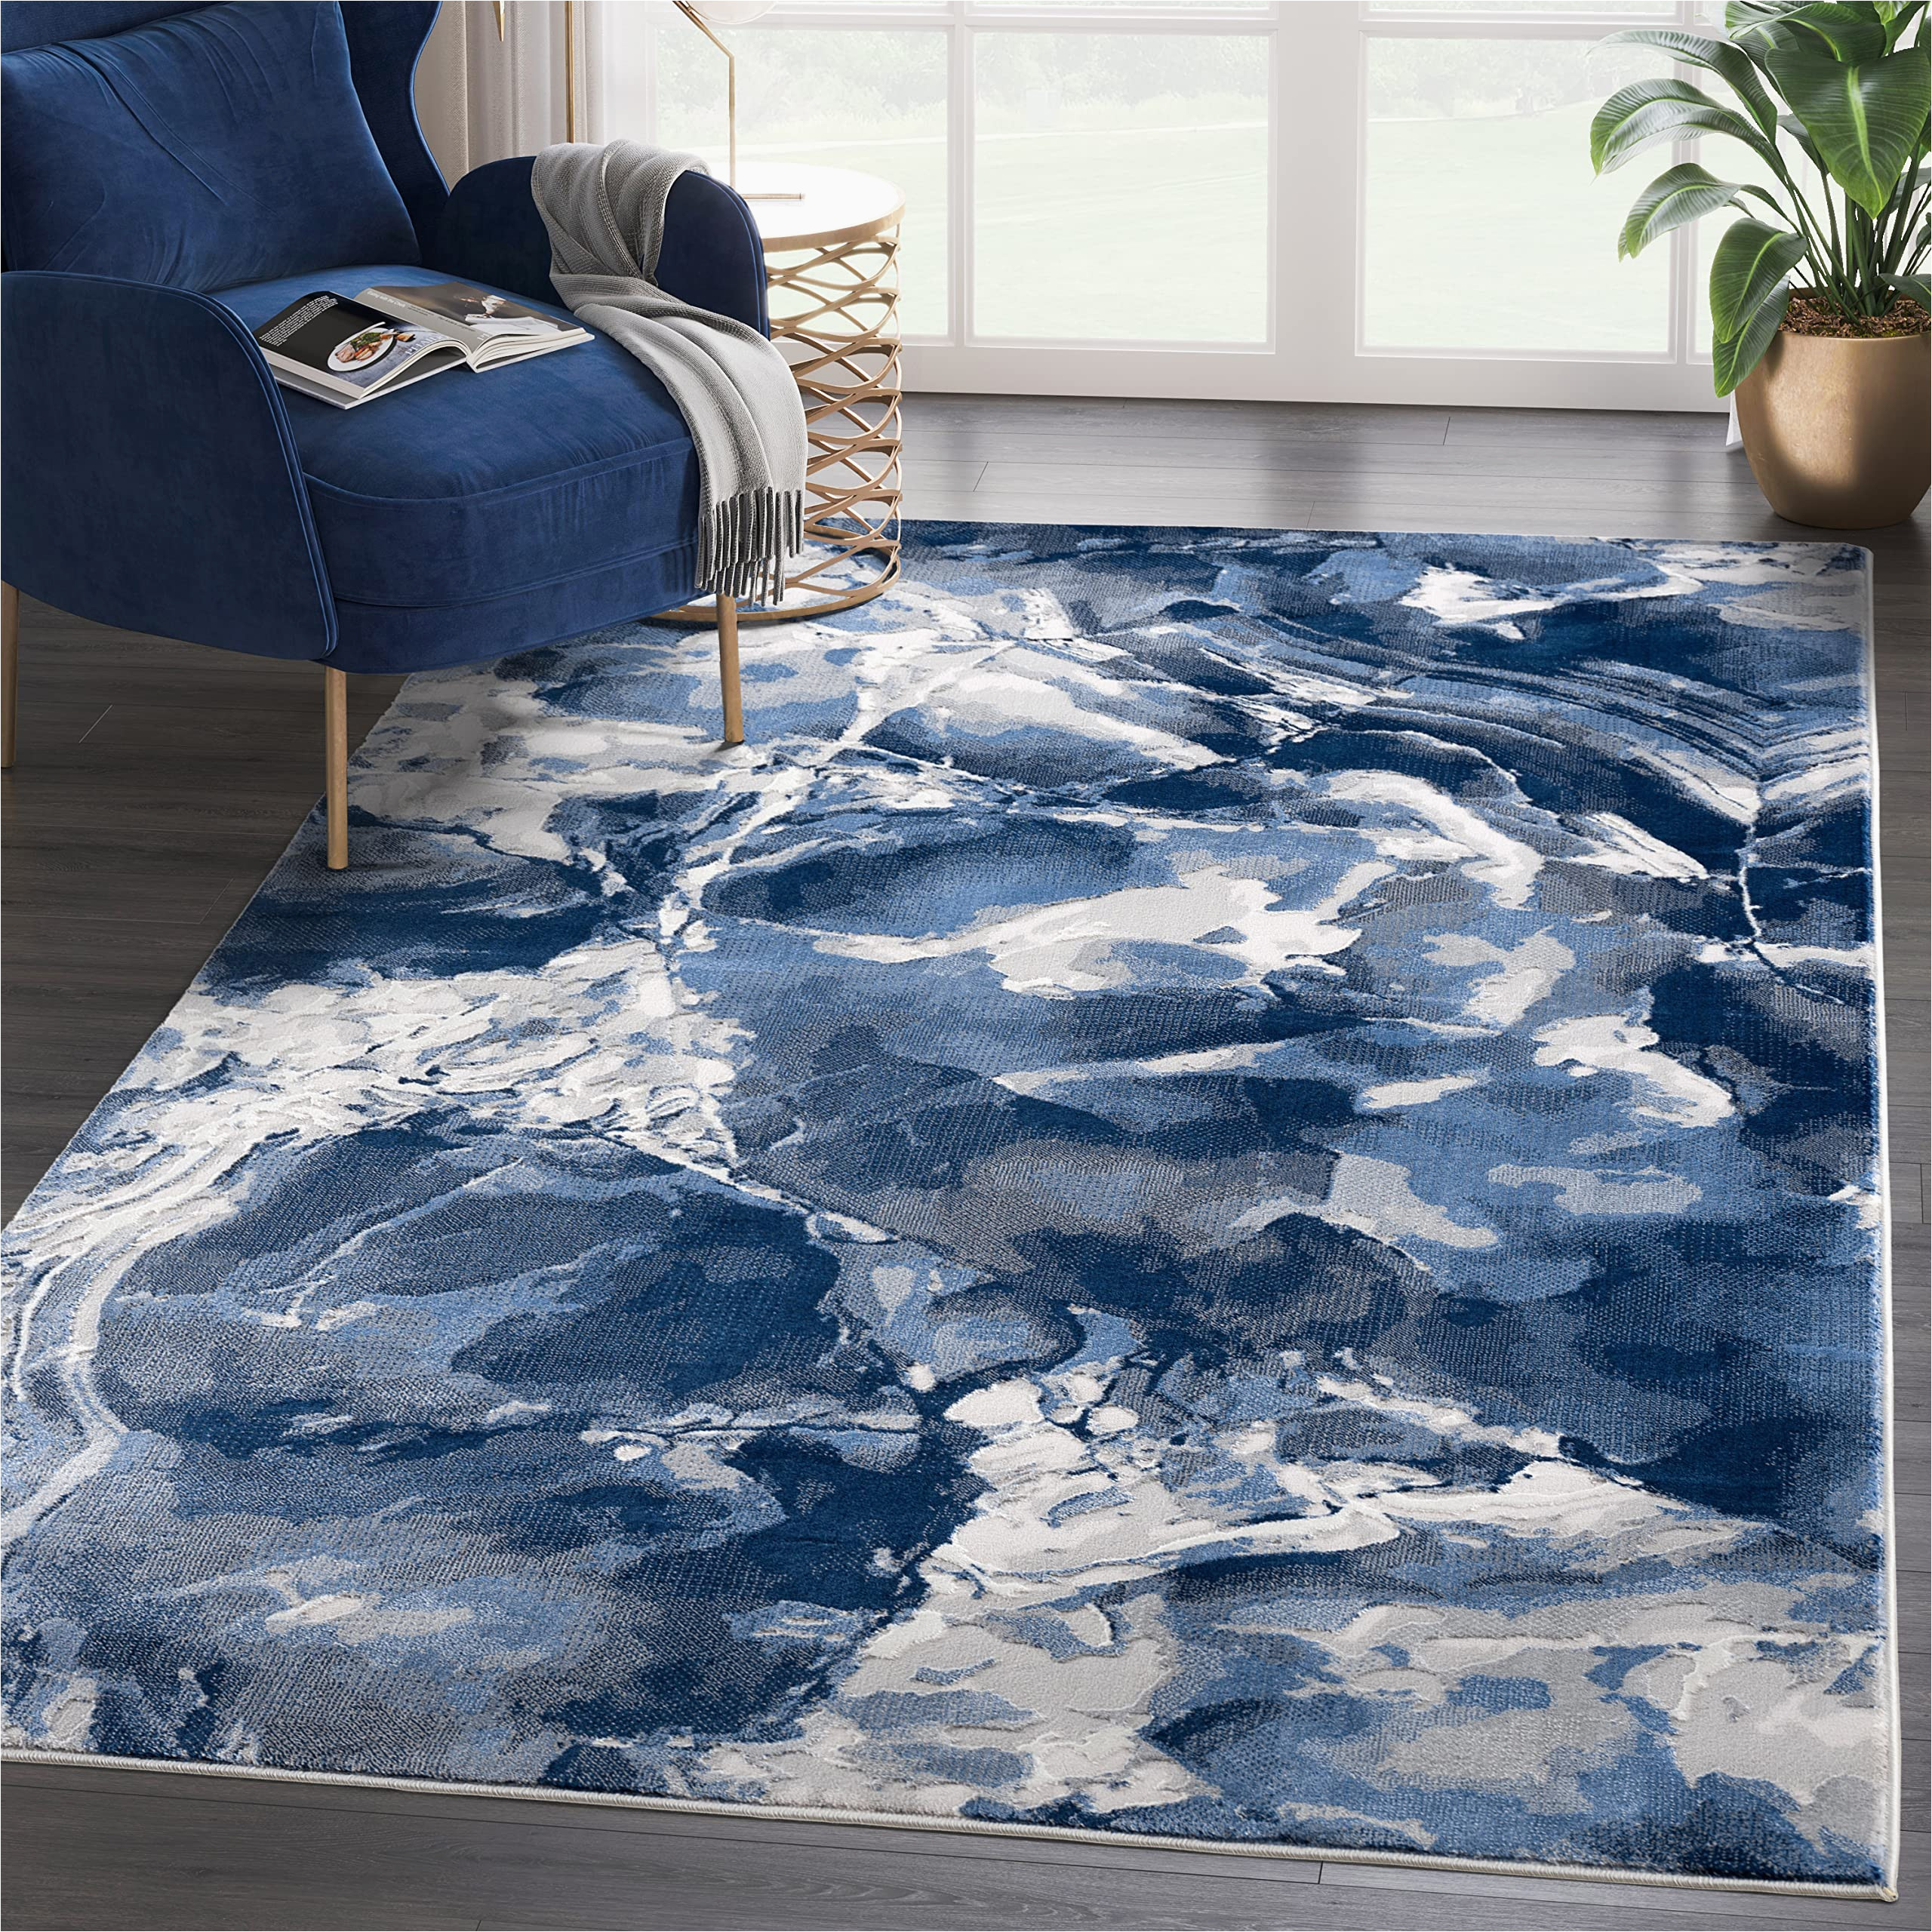 Blue Watercolor area Rug Amazon.com: Abani Rugs Contemporary Blue & Grey Marble Ice Design …